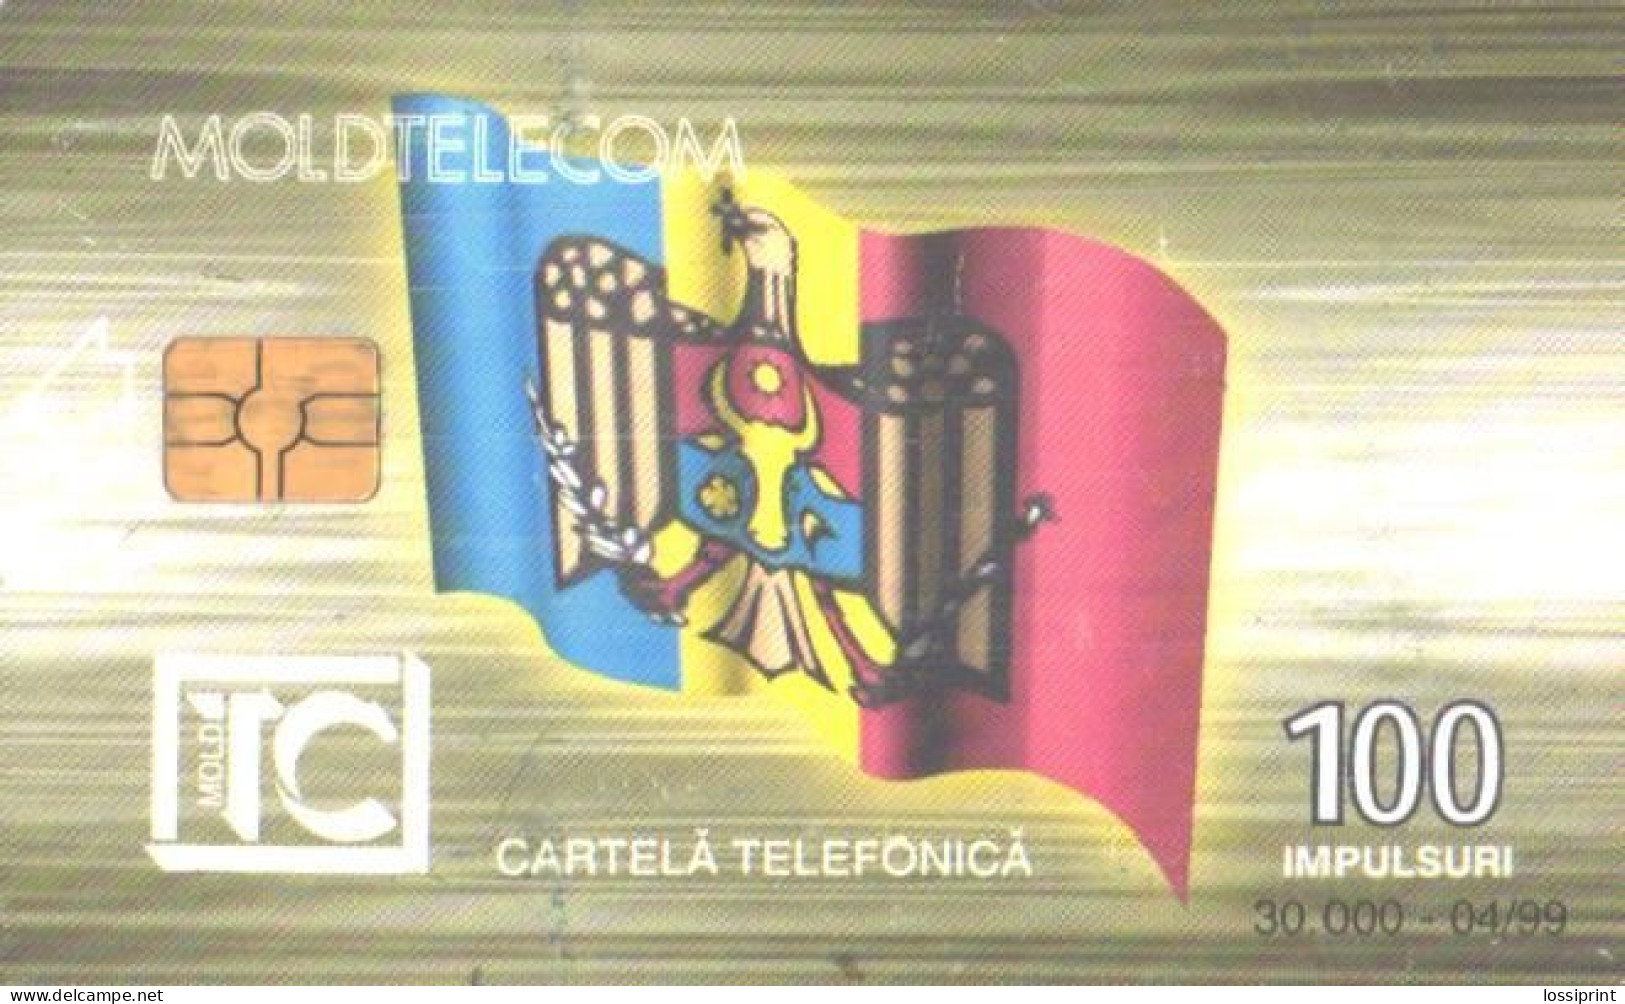 Moldova:Used Phonecard, Moldtelecom, 100 Impulses, Triumph Arch, 1999 - Moldavië